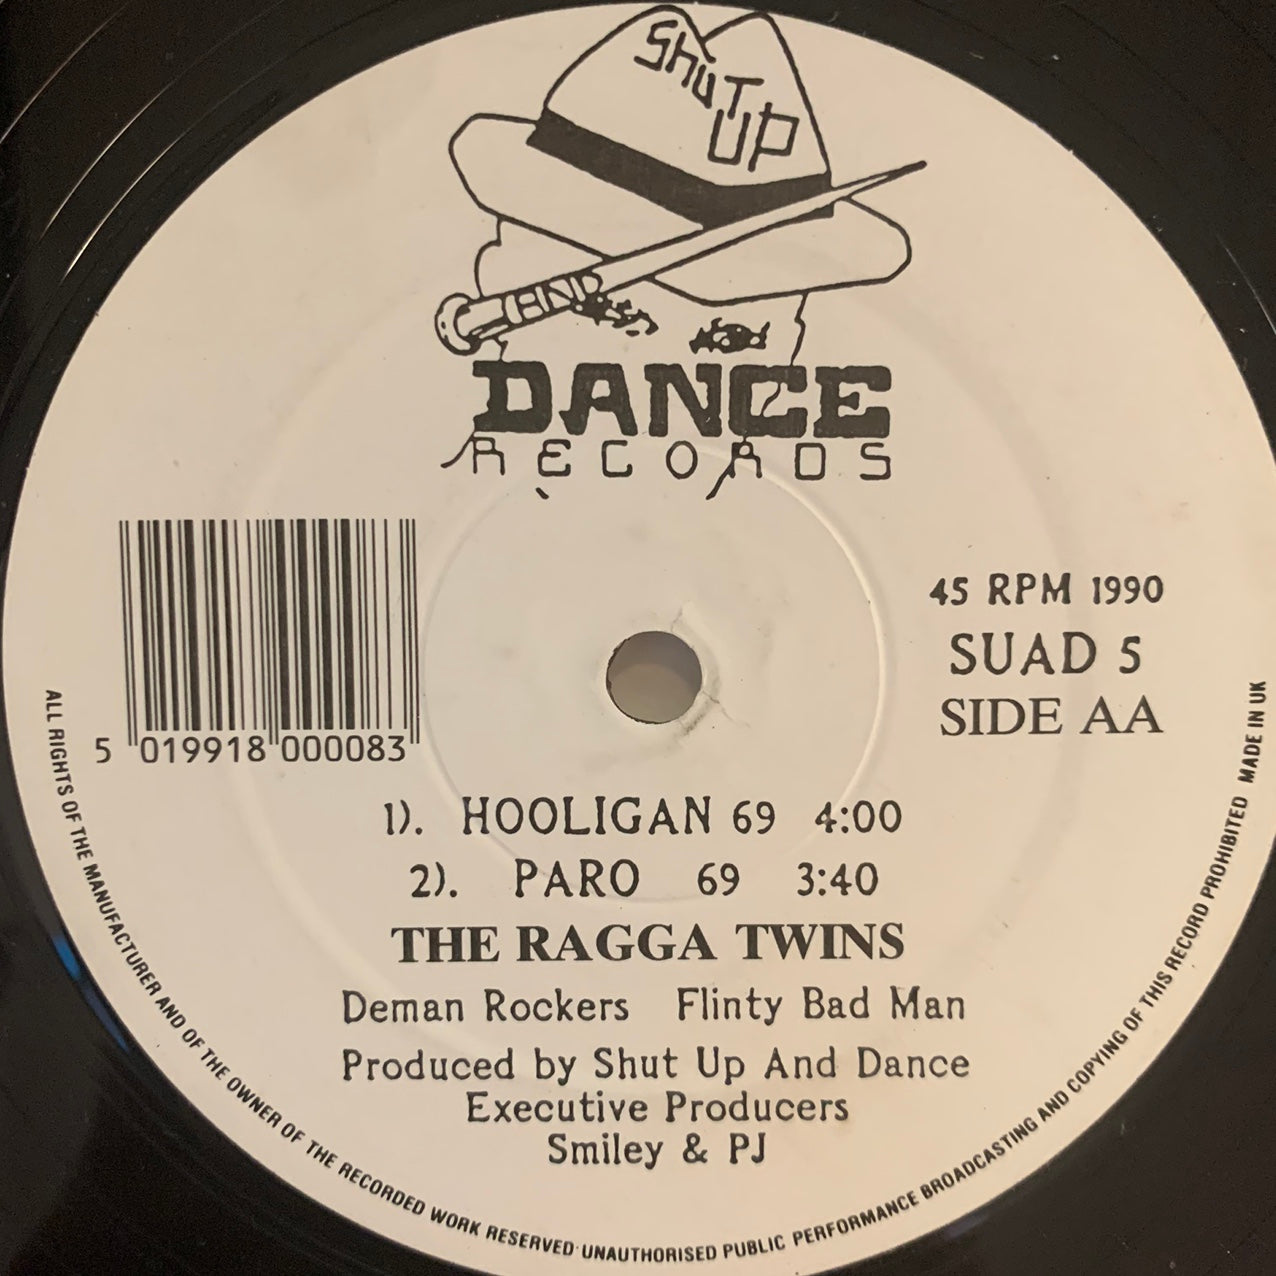 The Ragga Twins “Ragga Trip” / “Hooligan 69” 4 Version 12inch Vinyl